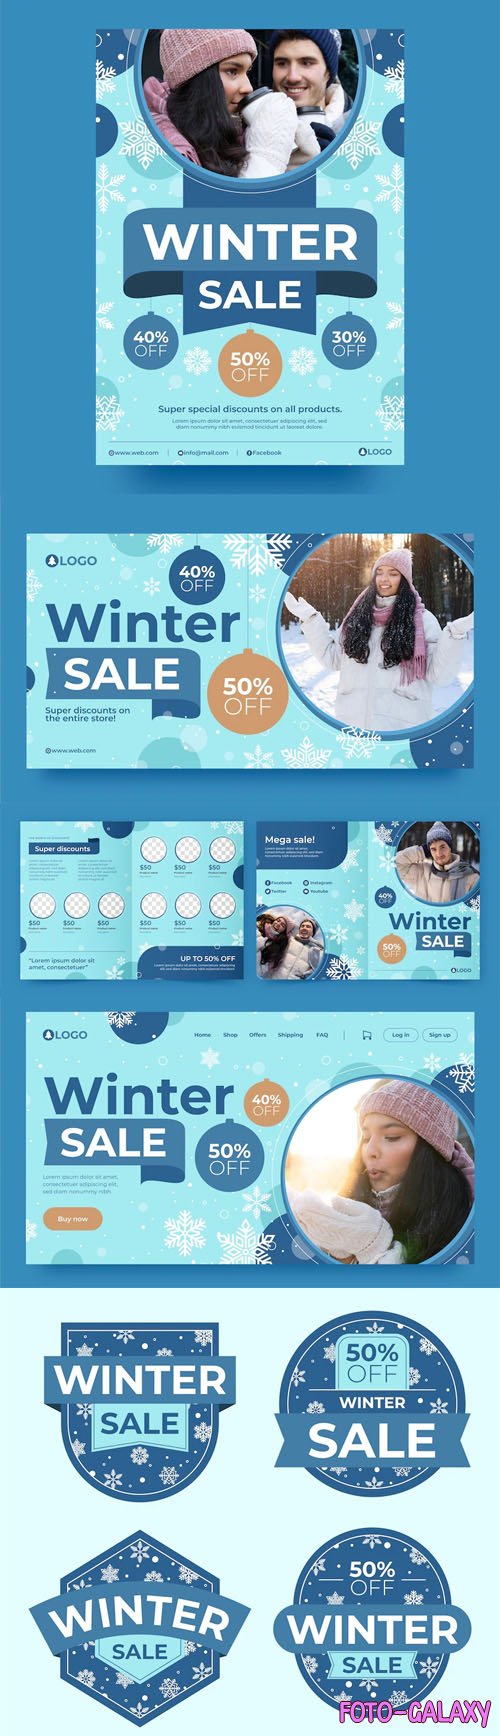 Winter Sale Flat Marketing Vector Templates Pack